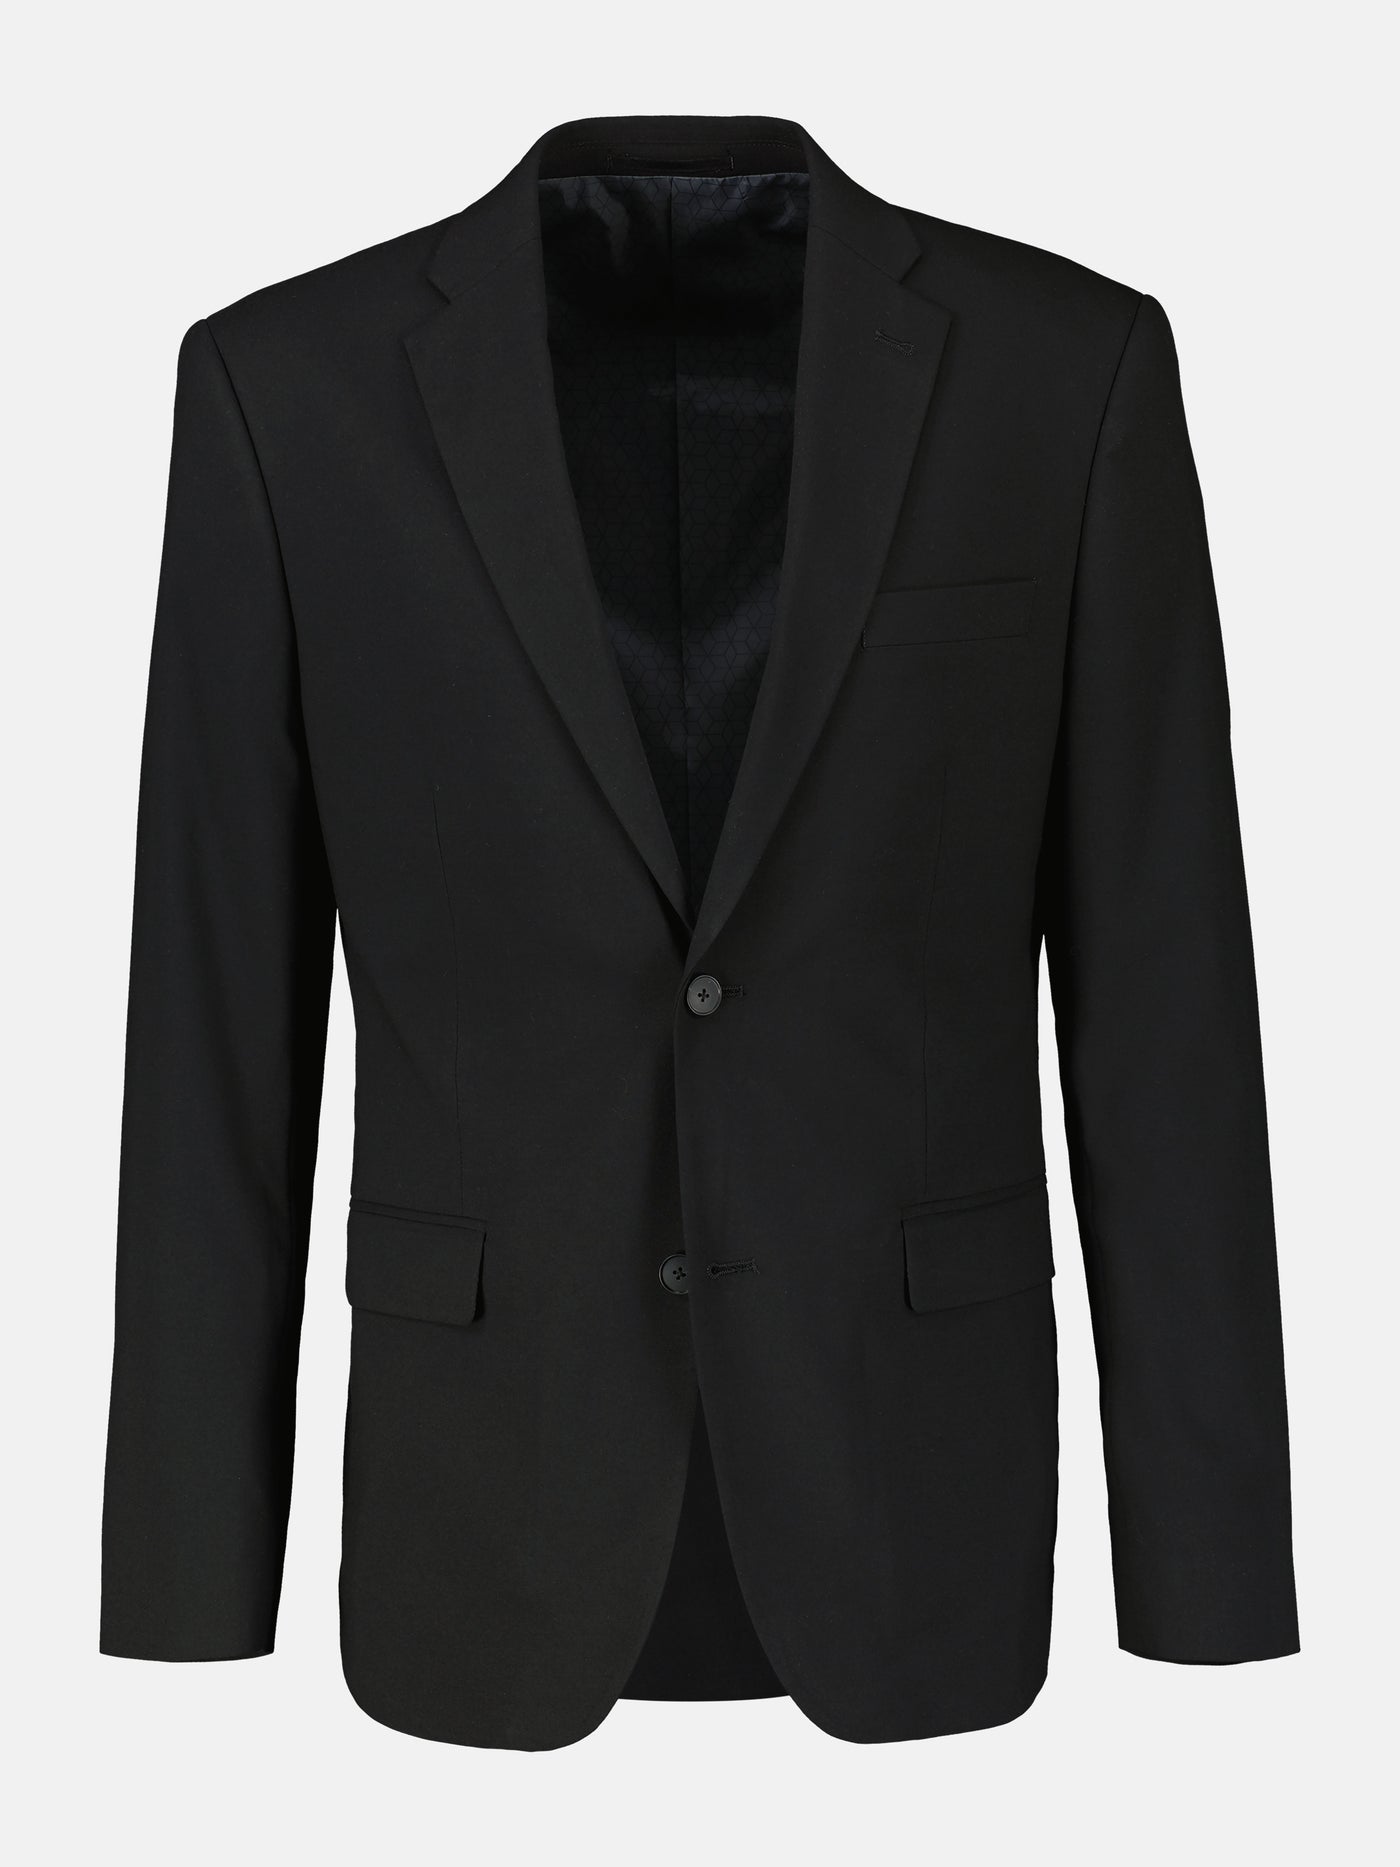 Men's suit jacket with stretch content, comfortable fit